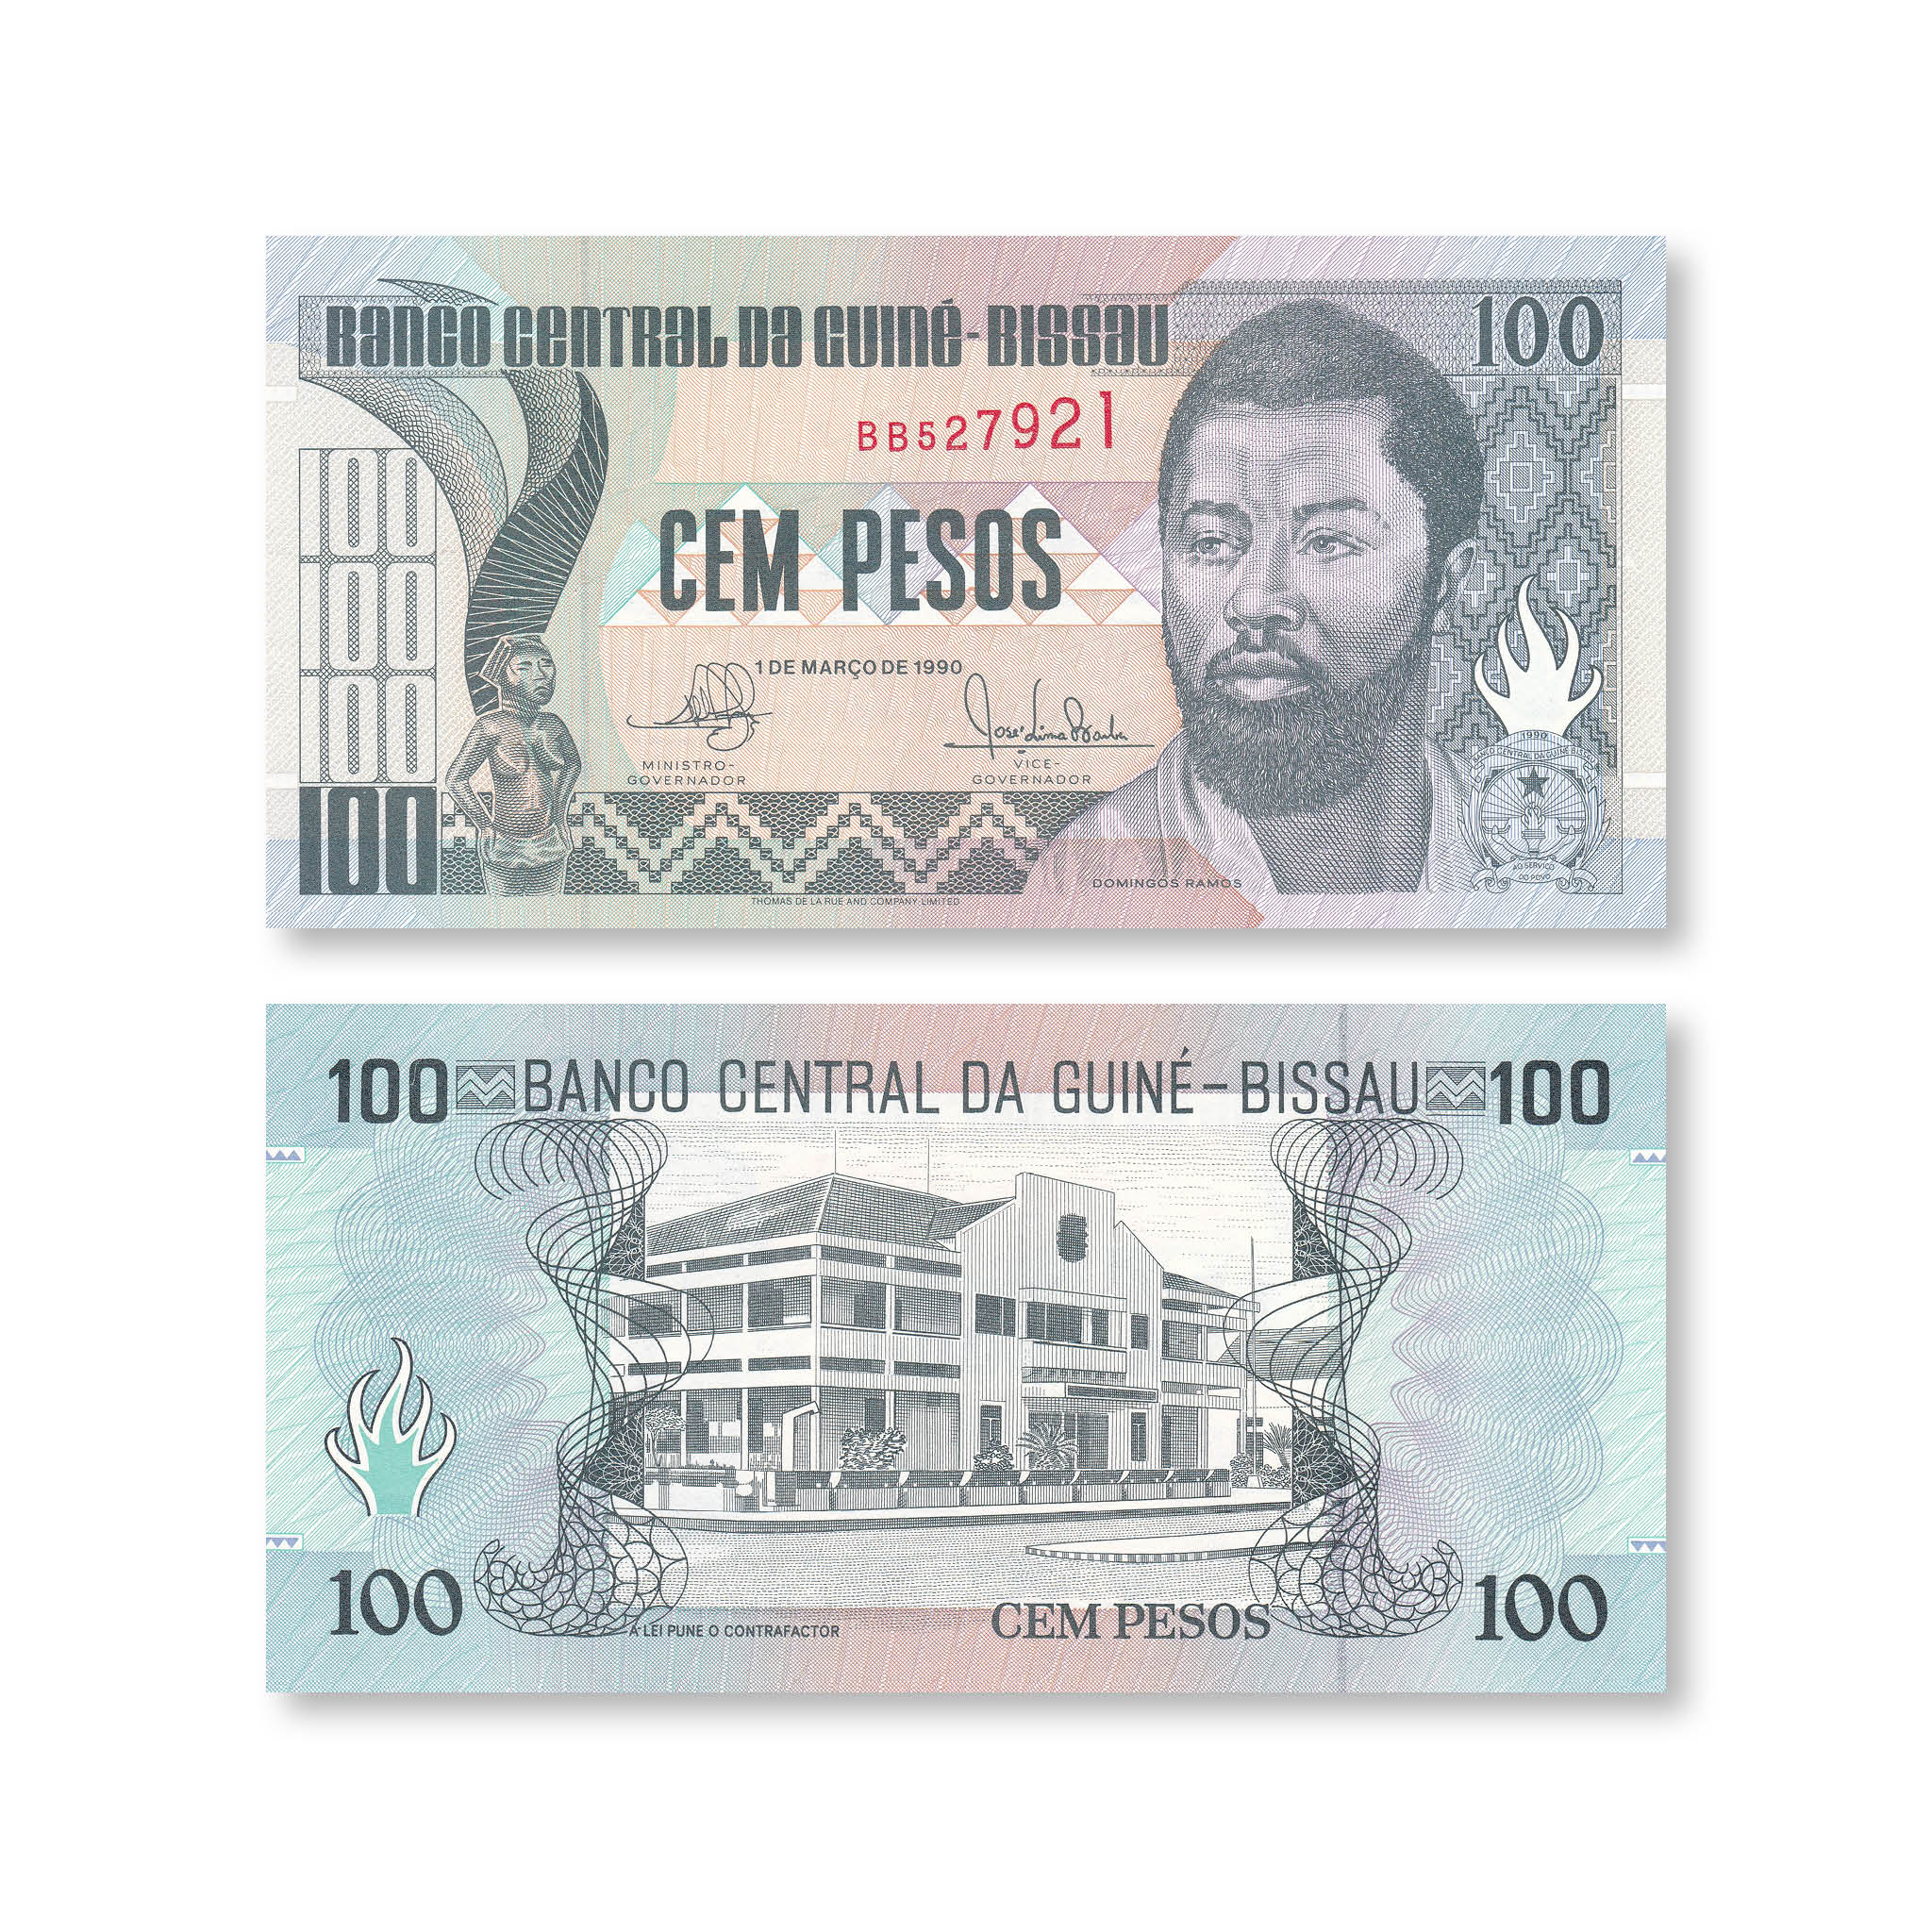 Guinea-Bissau 100 Pesos, 1990, B202a, P11, UNC - Robert's World Money - World Banknotes